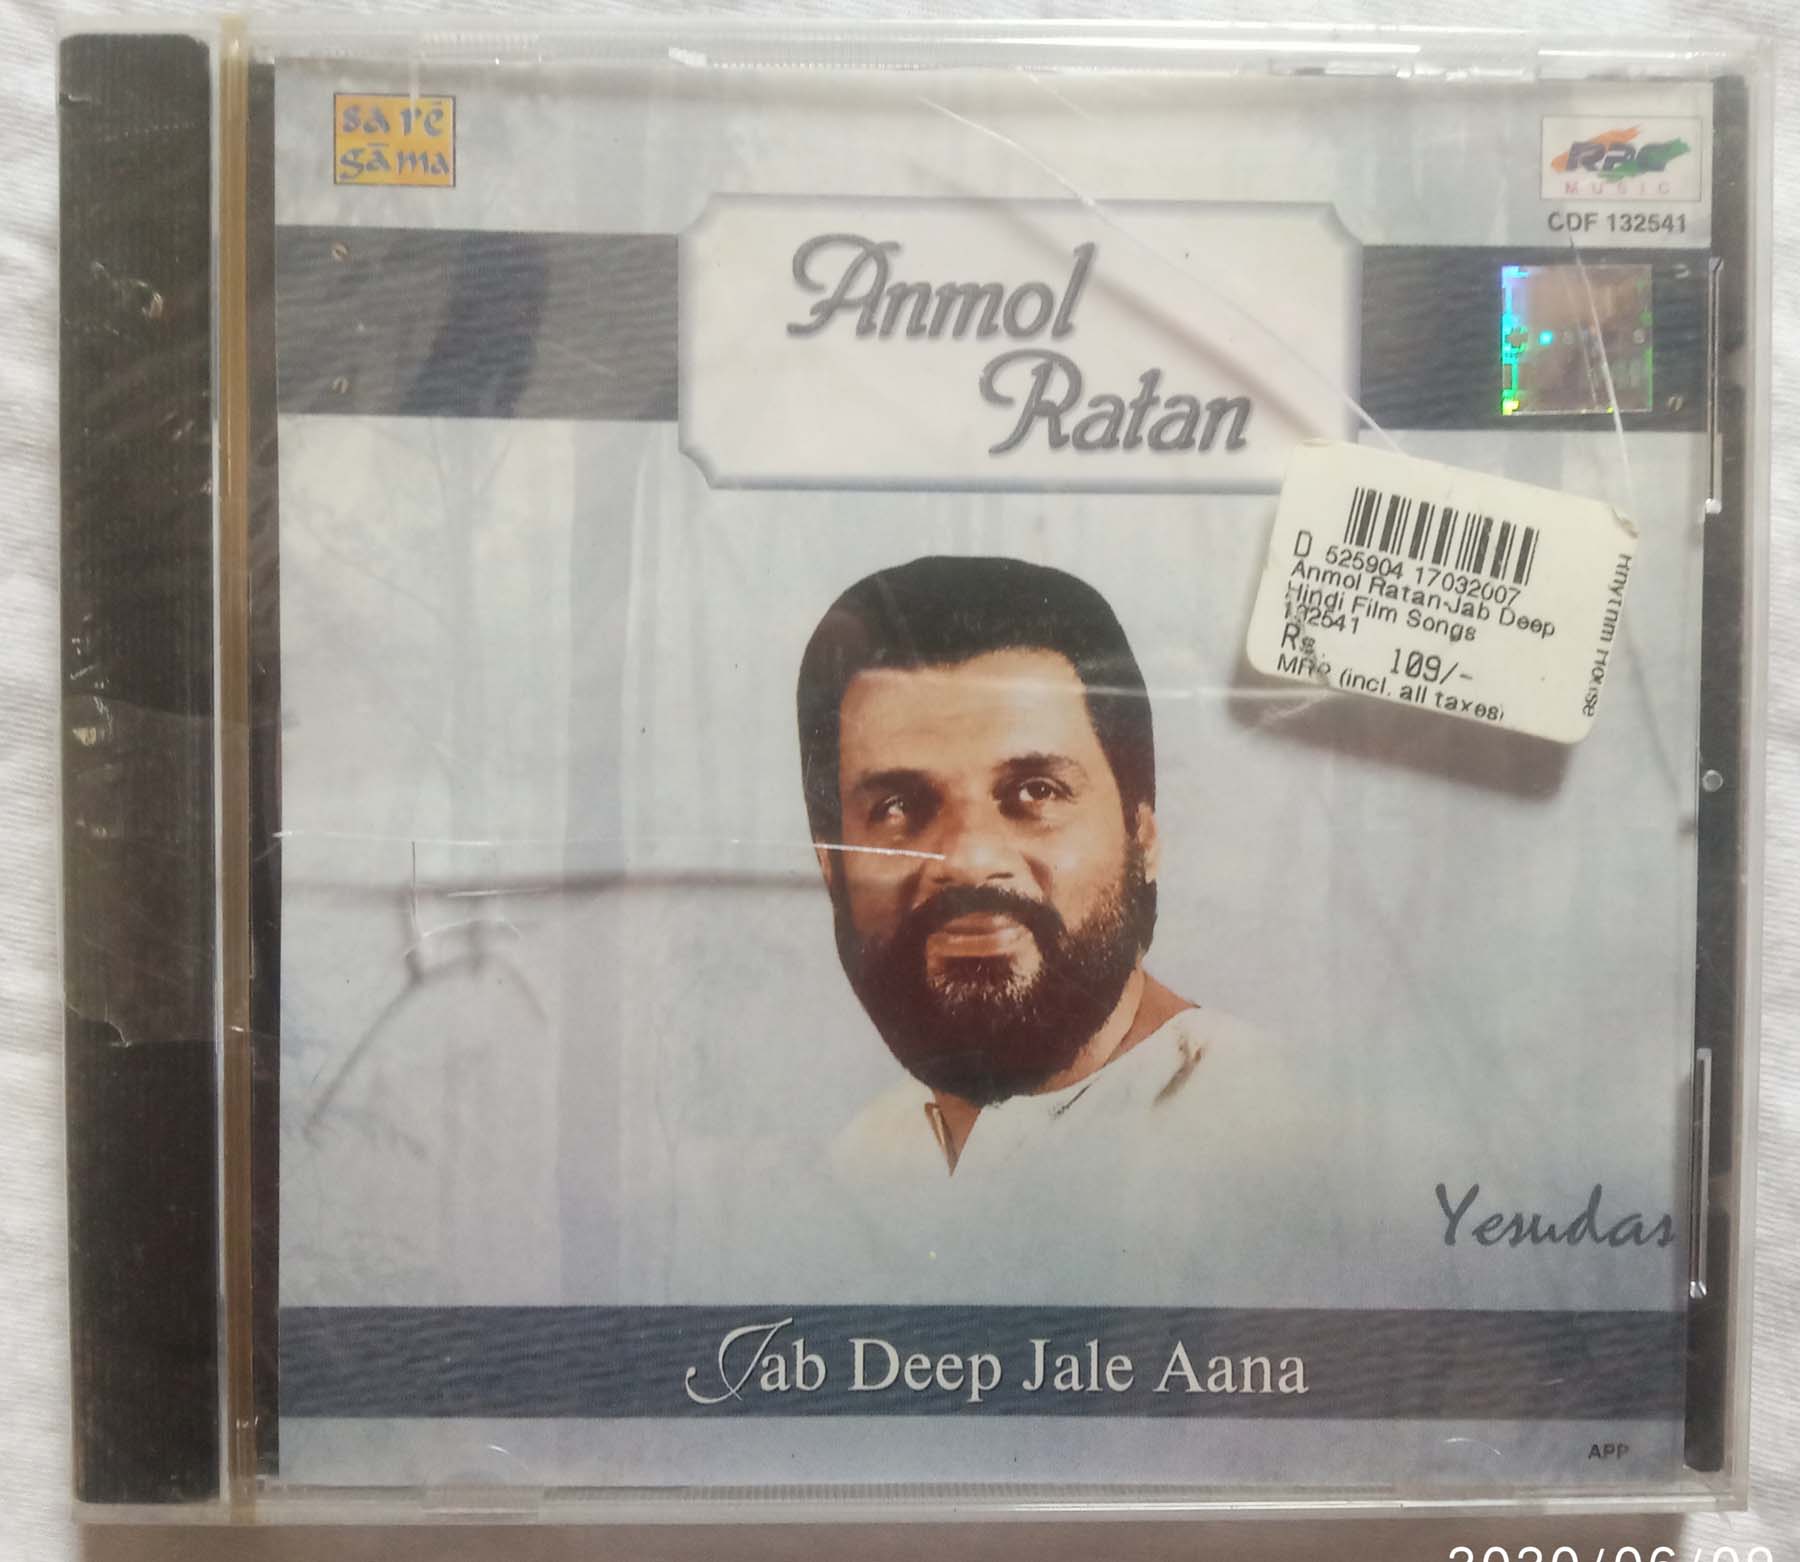 Anmol Ratan Yesudas Jab Deep Jale Aana Hindi Audio CD banumass.com